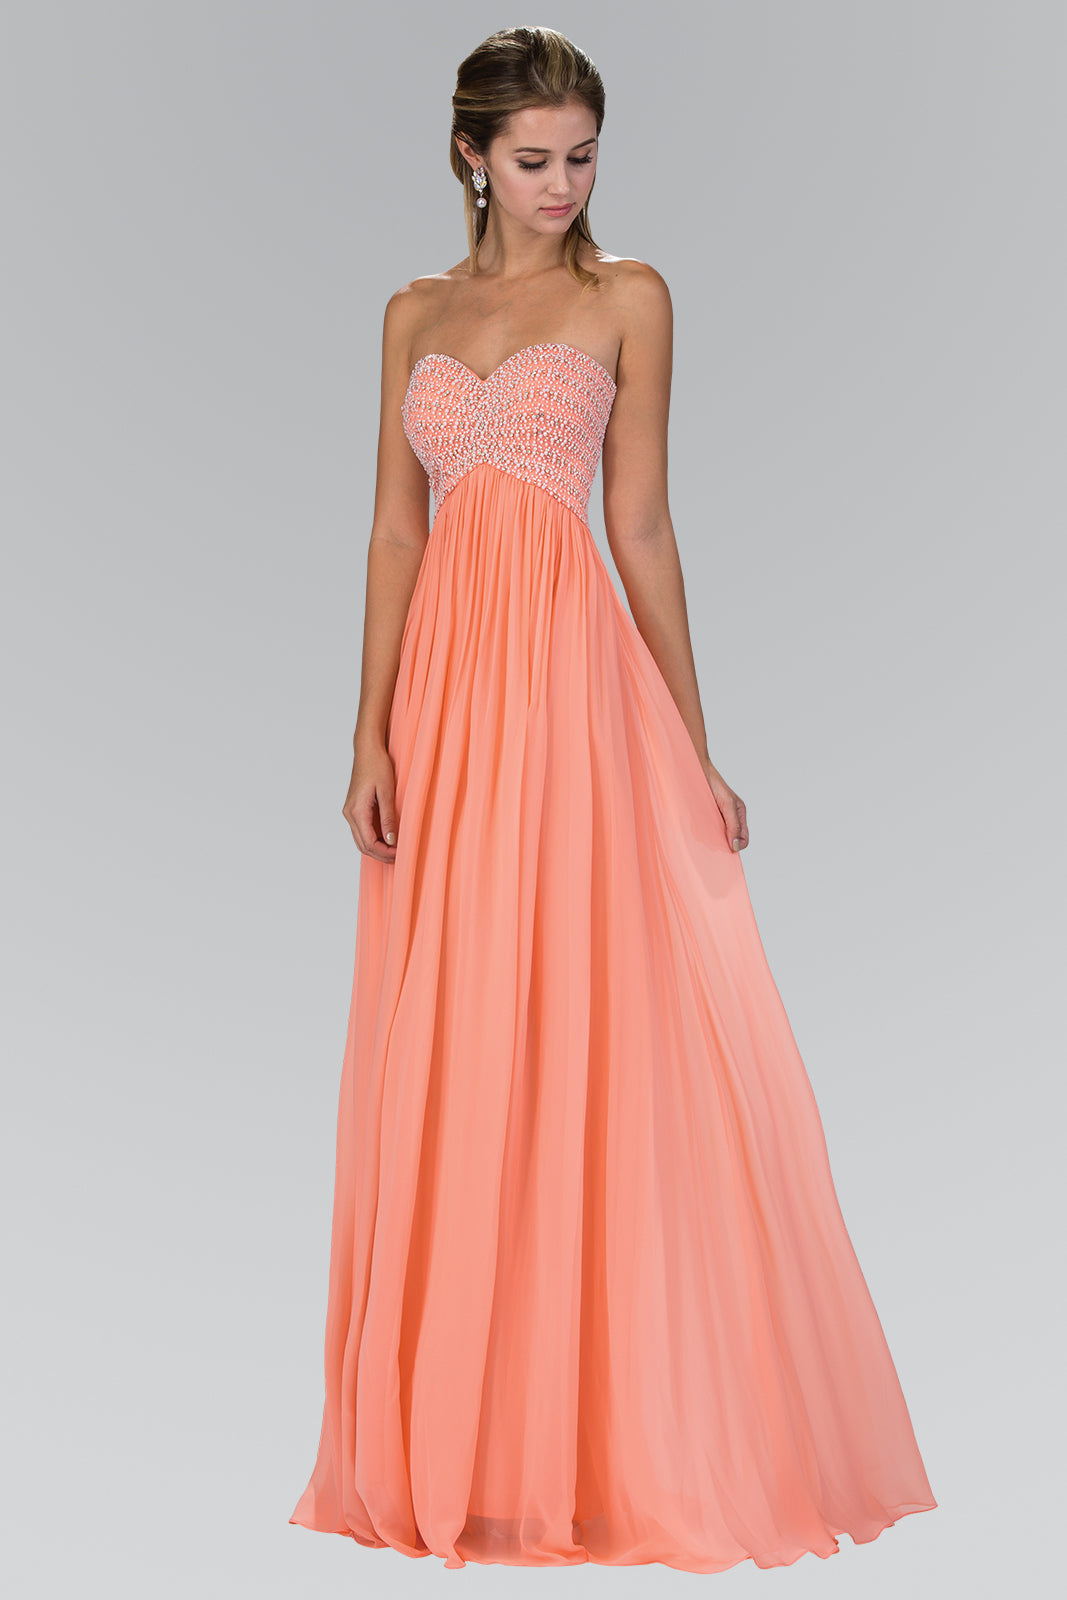 Beaded Bodice Sweetheart Strapless Dress by Elizabeth K - GL2148 - Special Occasion